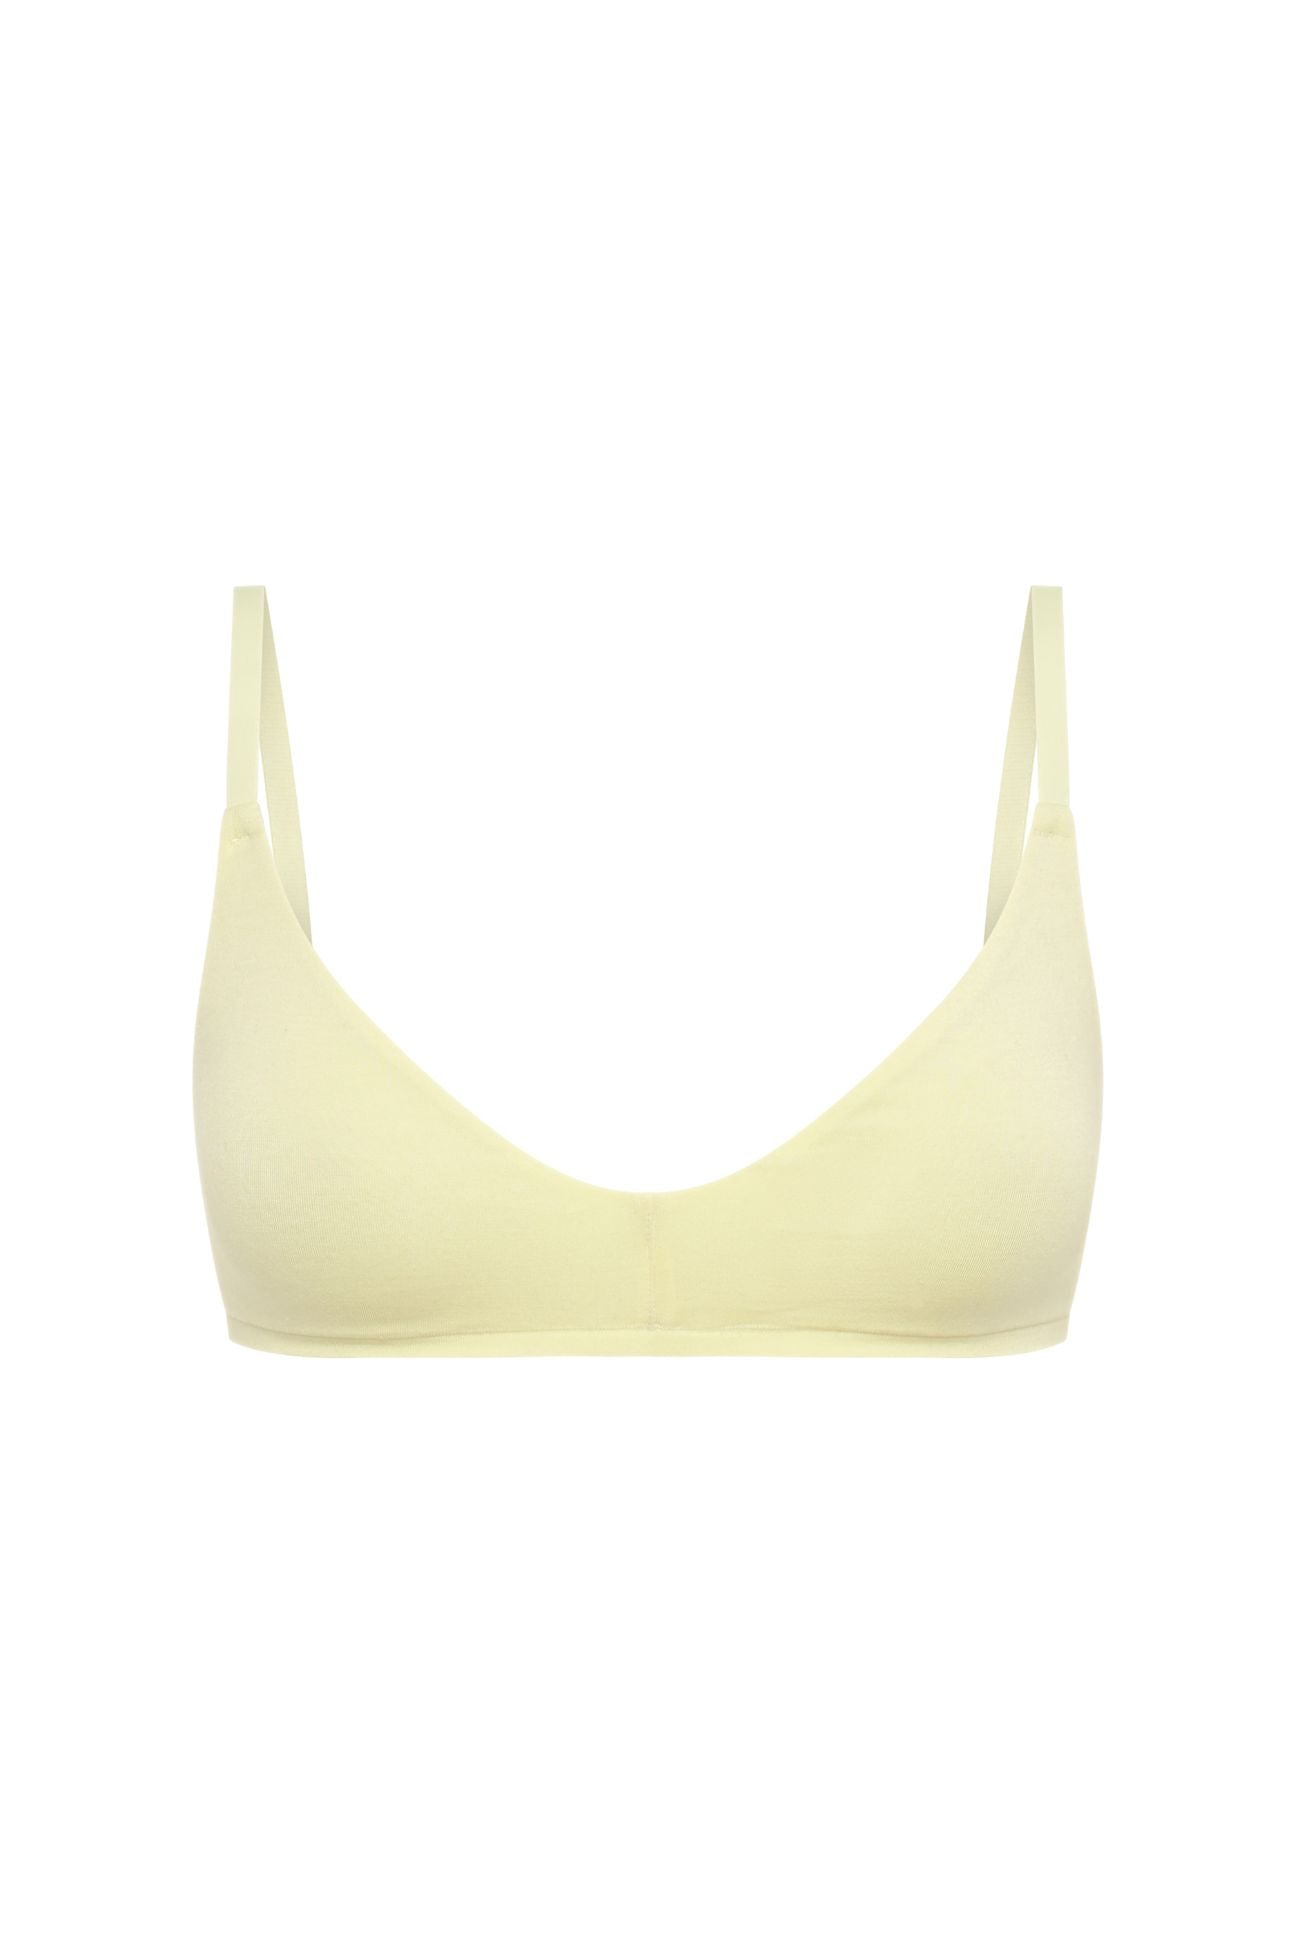 The Bralette - Lemon Limited Edition, Bras - First Thing Underwear